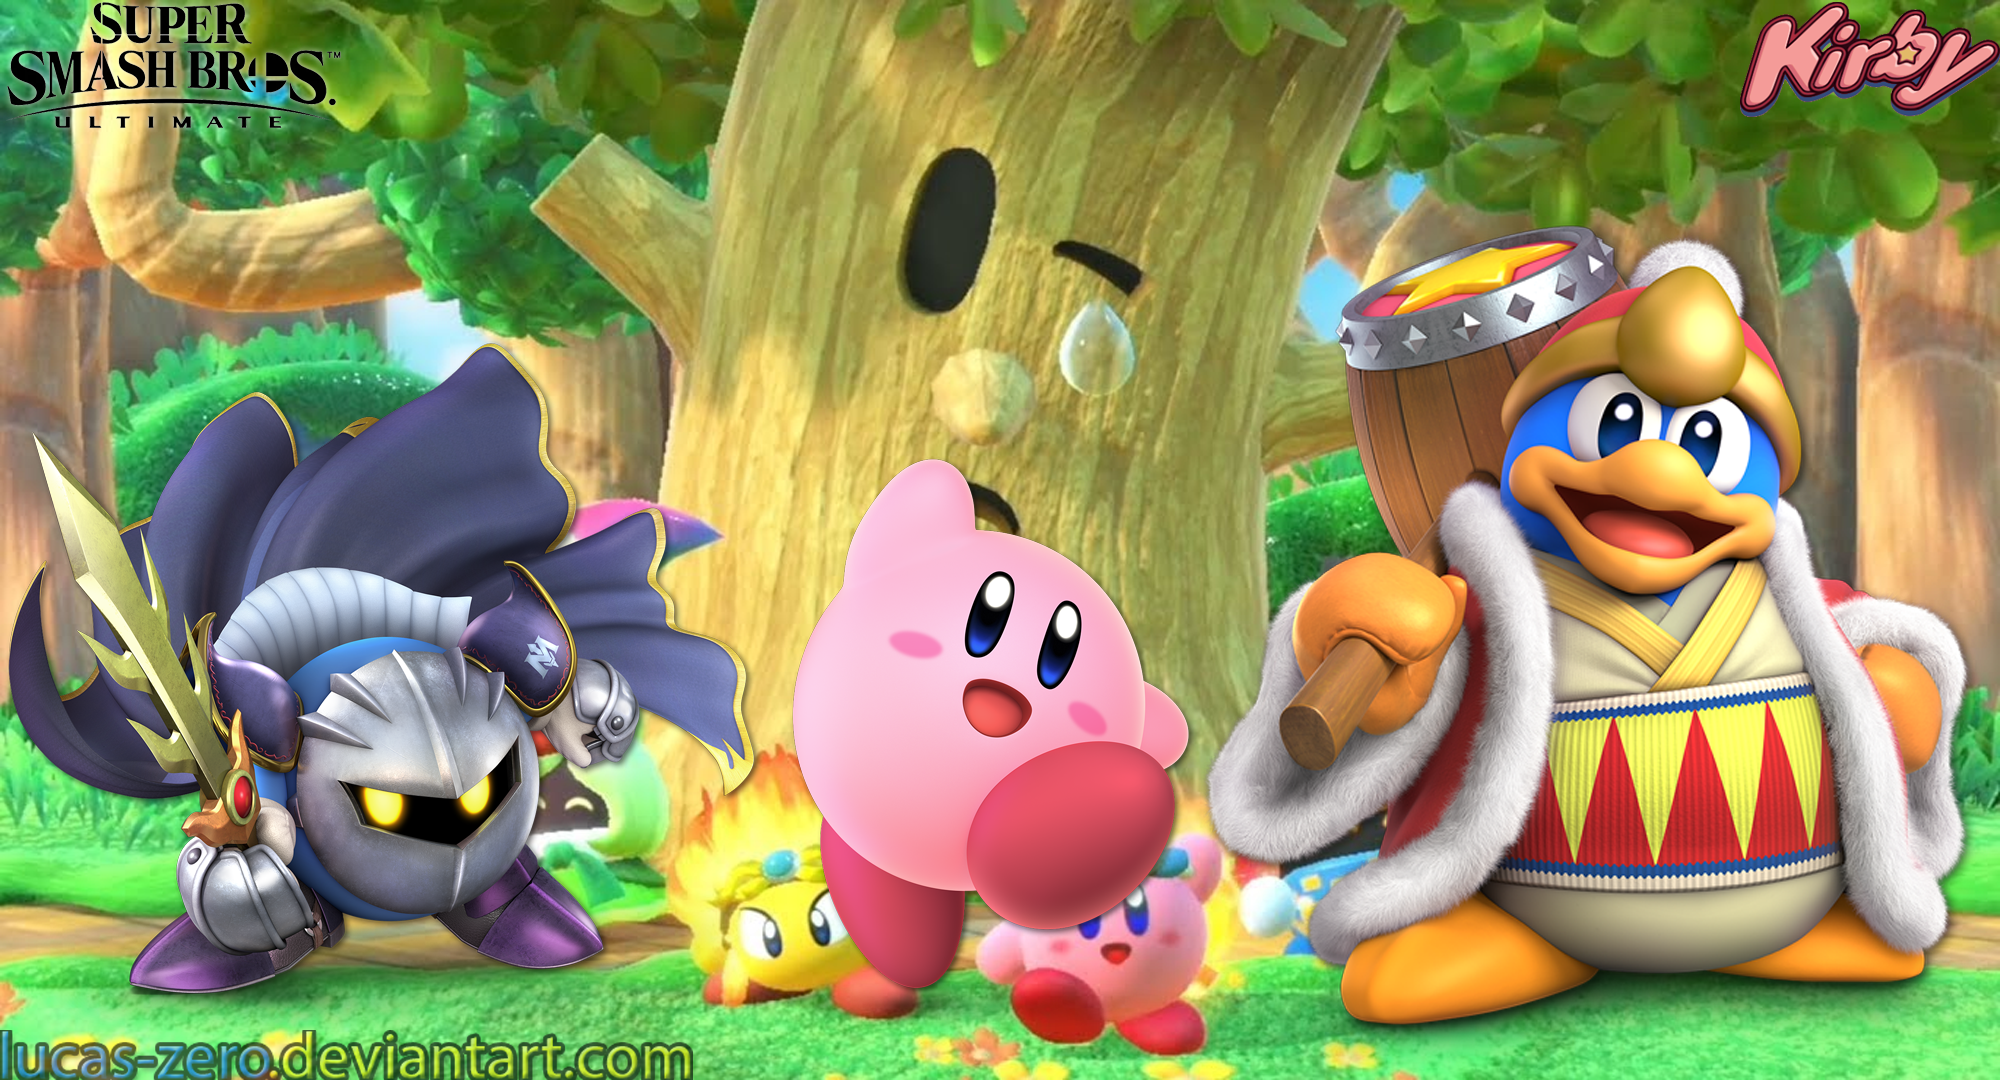 Kirby Super Smash Bros. Ultimate Wallpaper by Lucas-Zero on DeviantArt